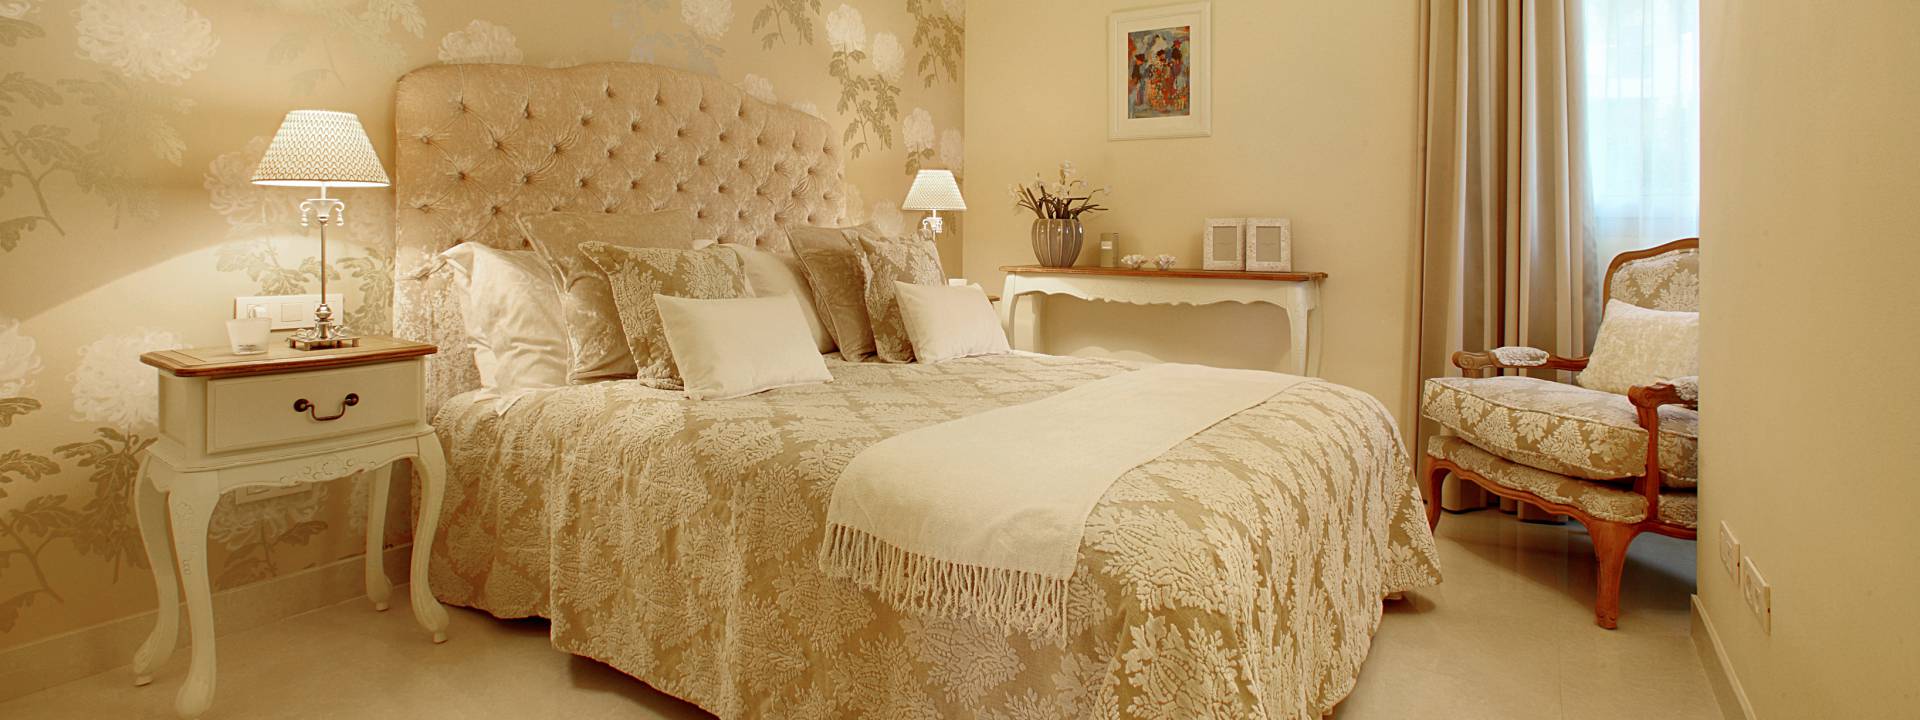 Luxury bedroom, Yvette Taylor London, neutral deco